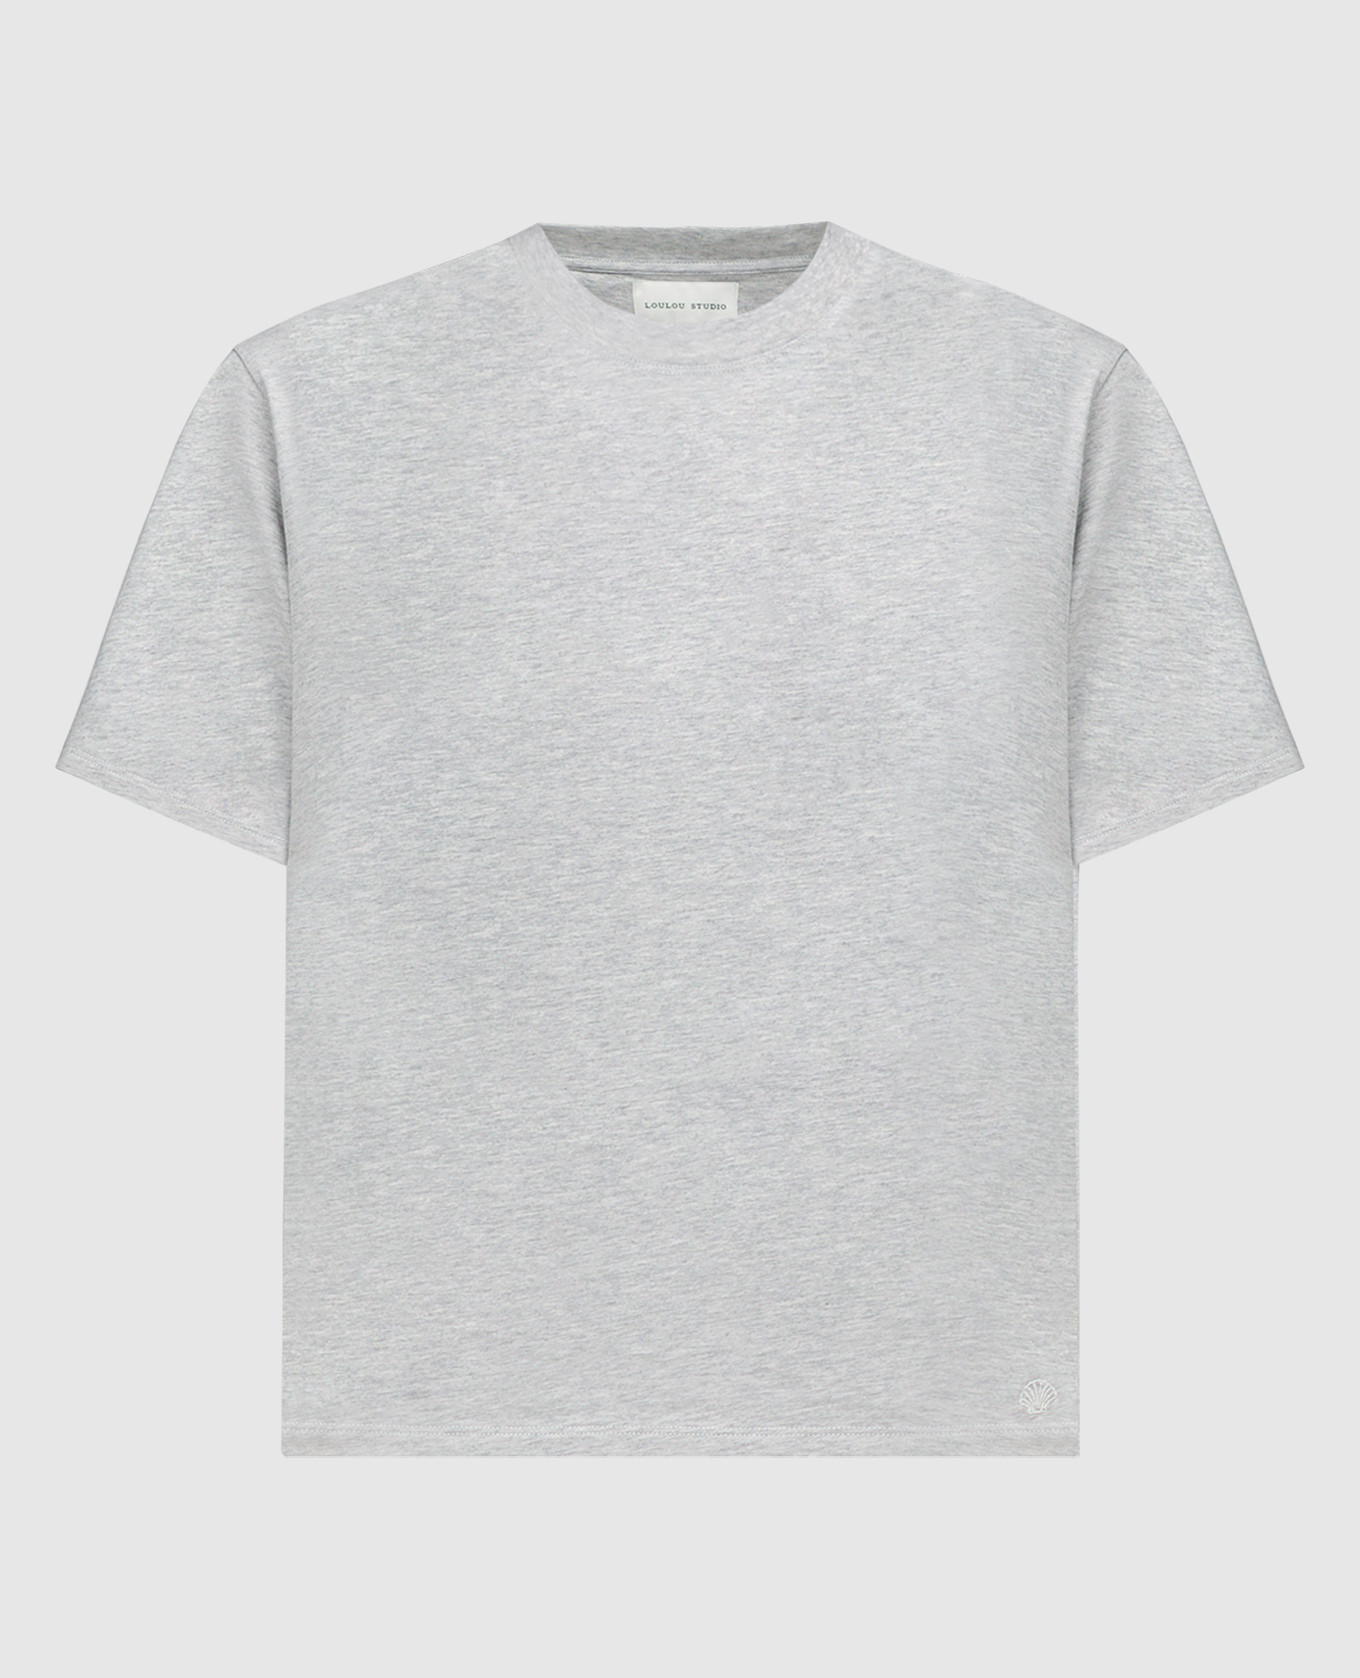 Telanto gray melange t-shirt